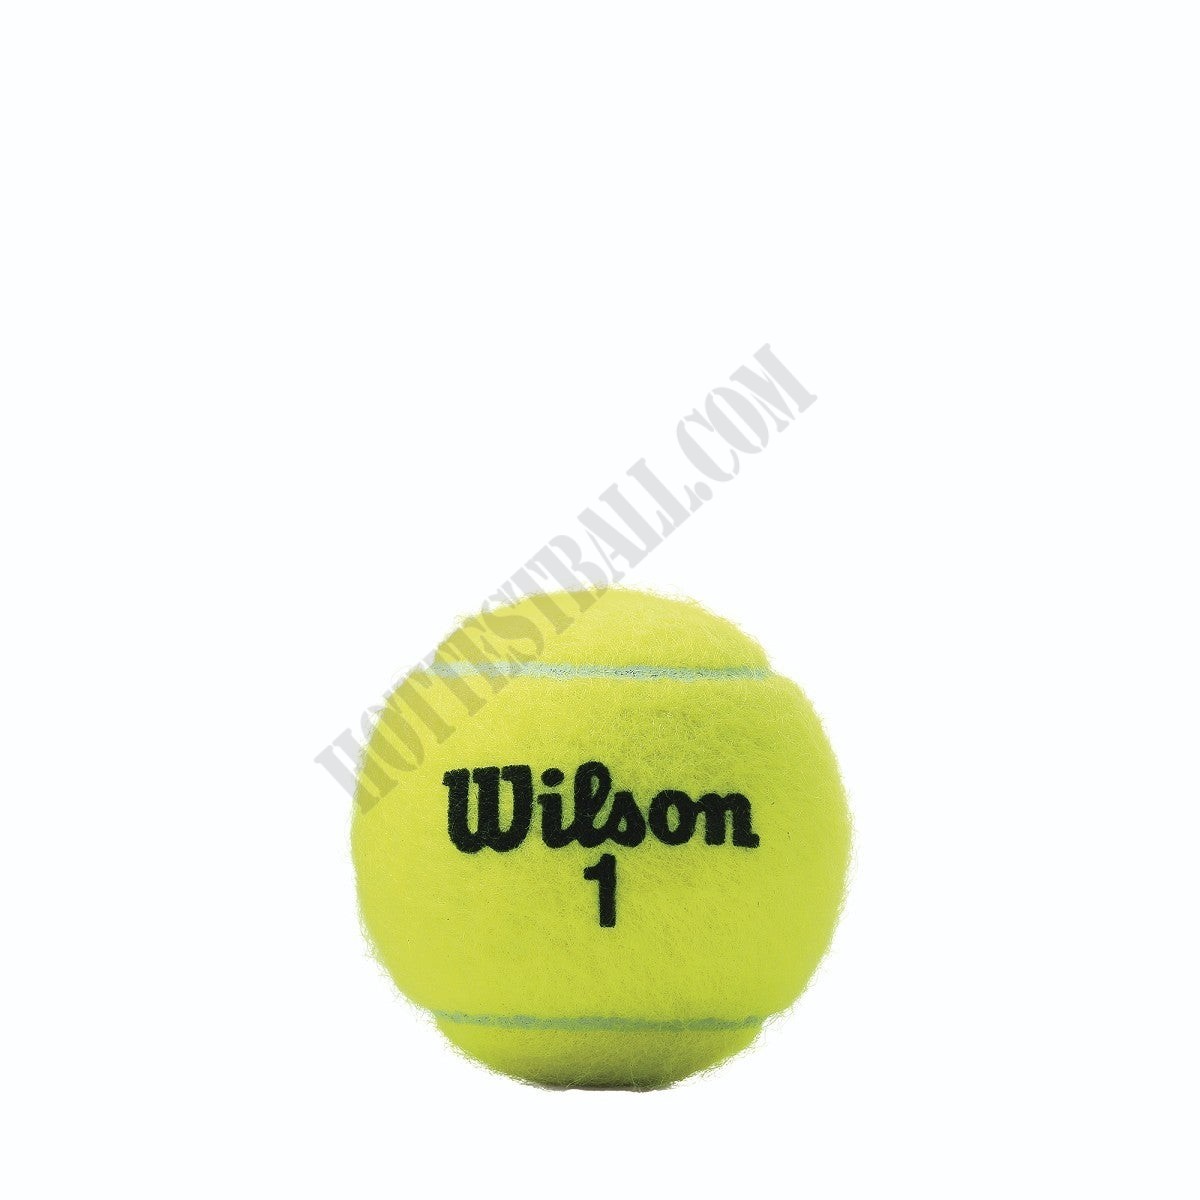 Championship Tennis Balls - 4 Pack - Wilson Discount Store - -1